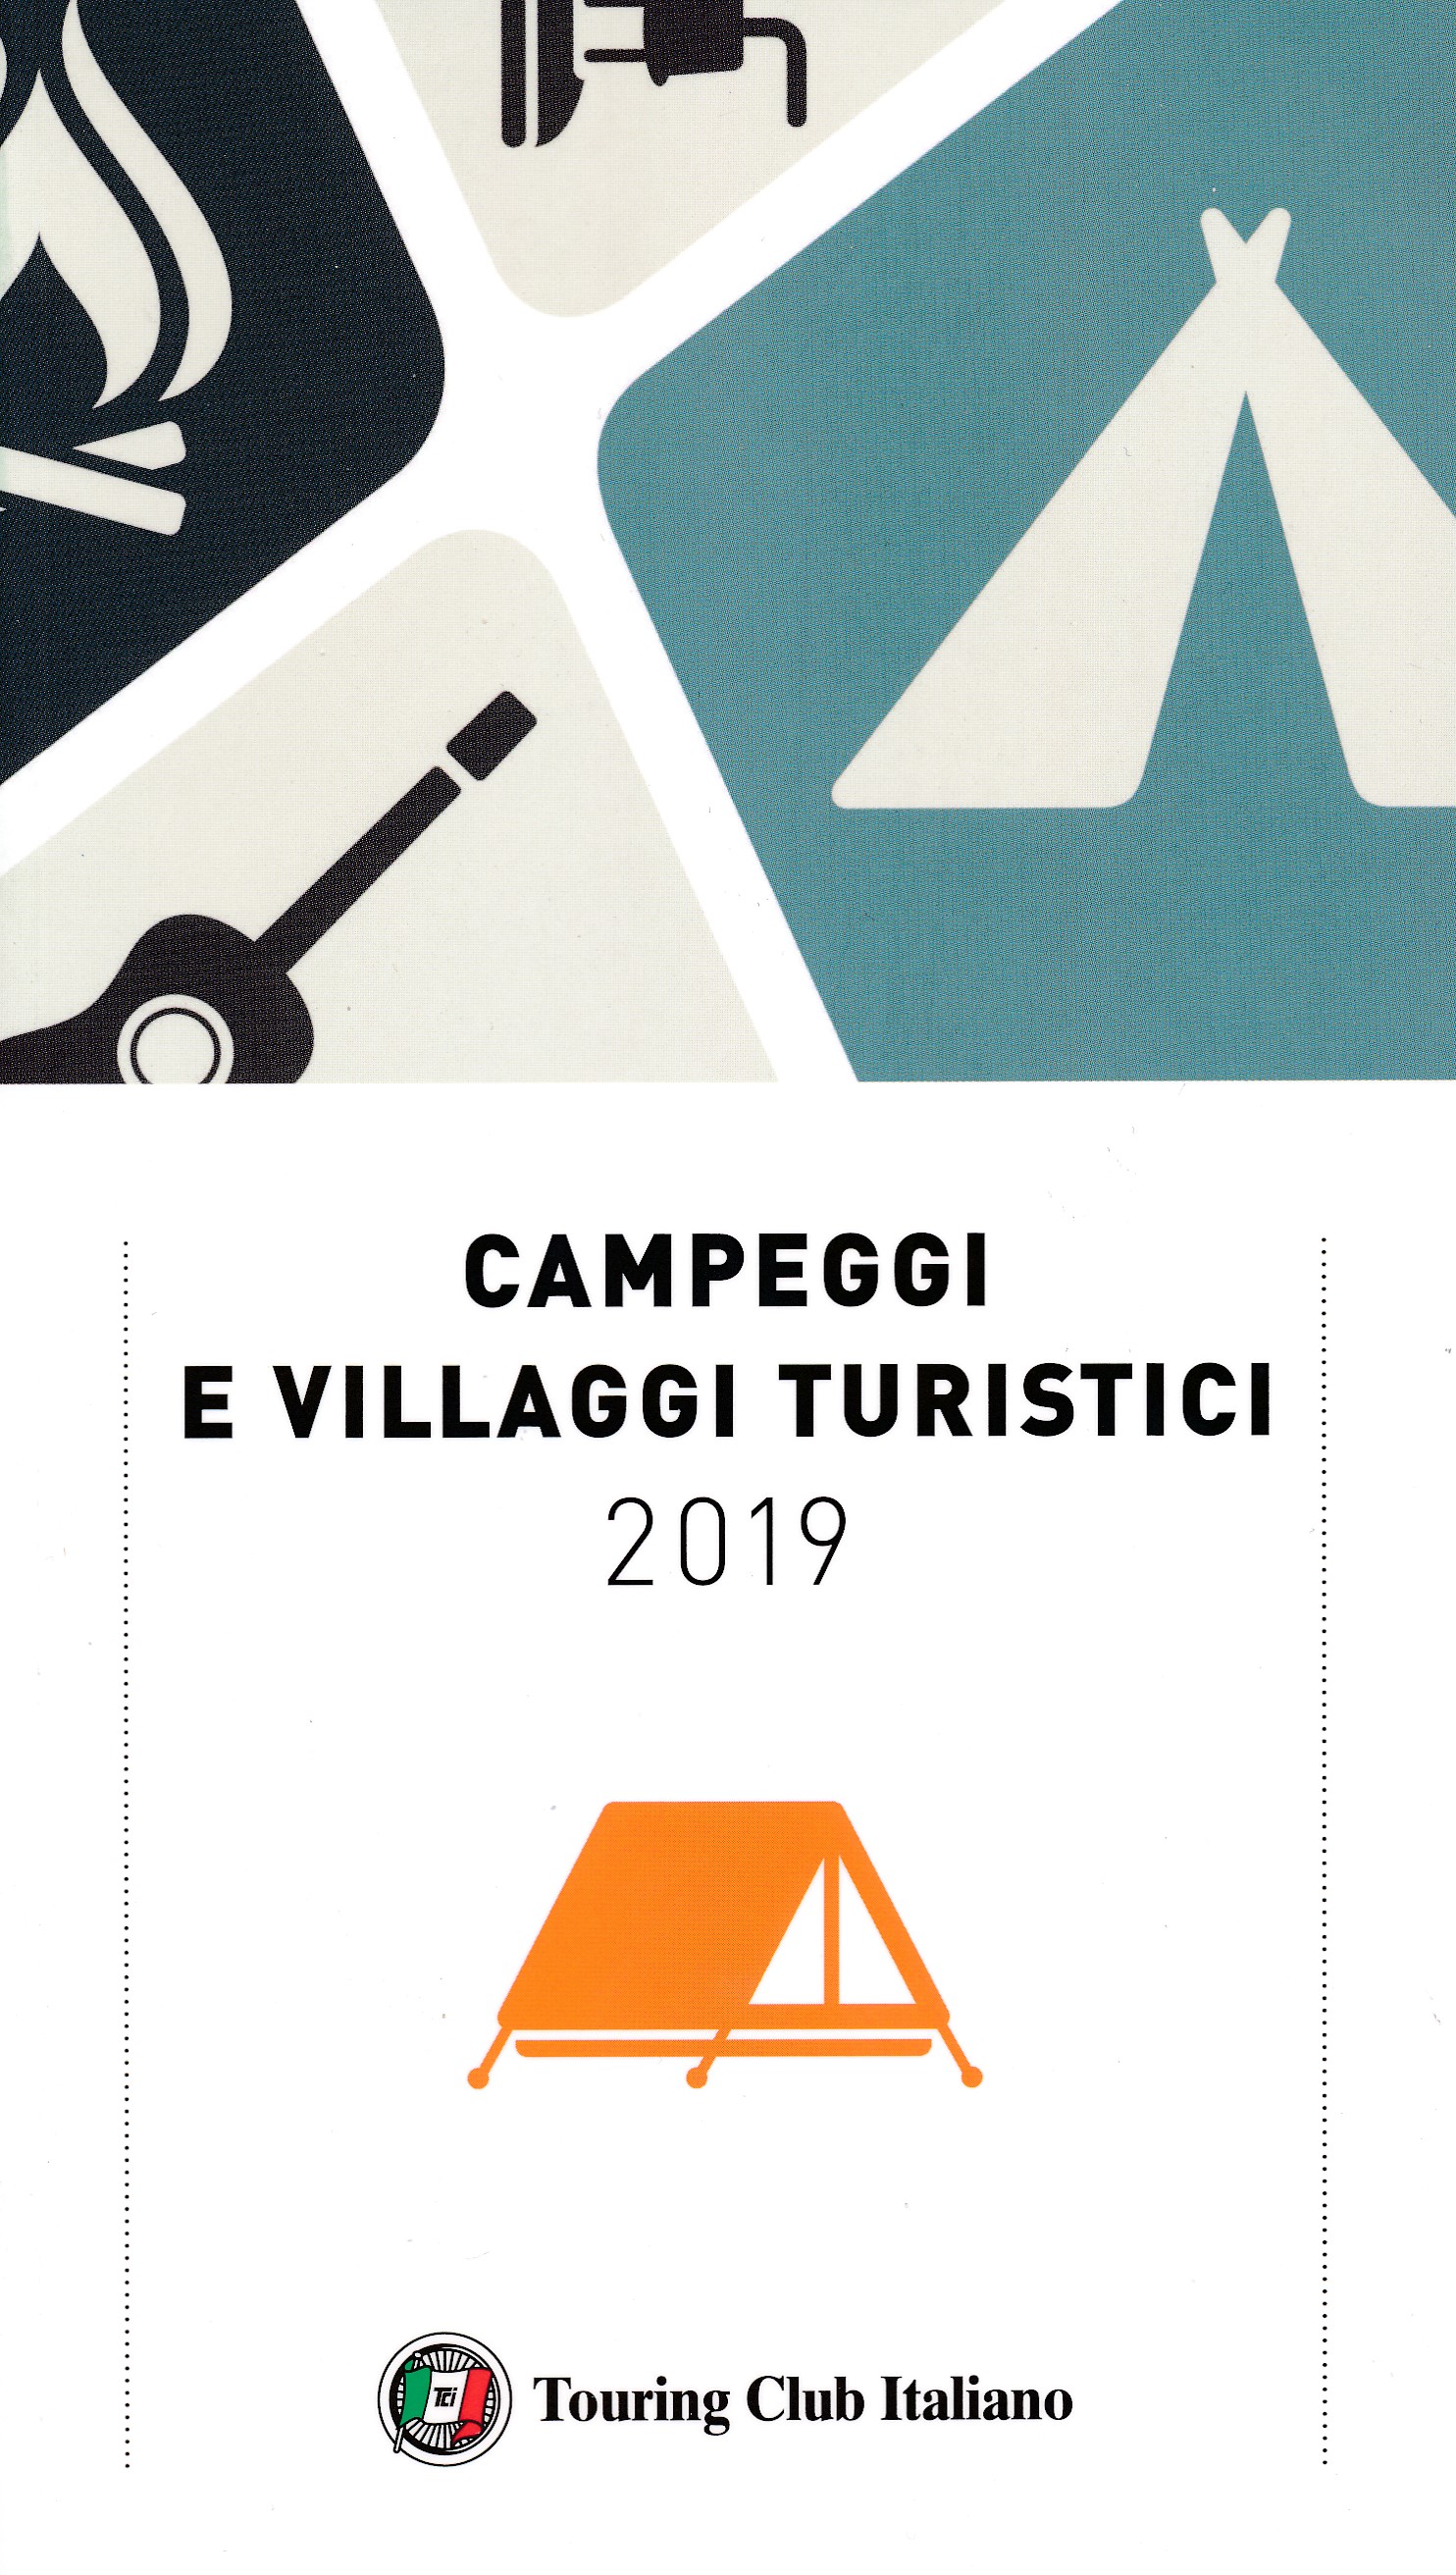 Campinggids - Campergids Campeggi e villagi turistici 2019 | Touring Club Italiano de zwerver